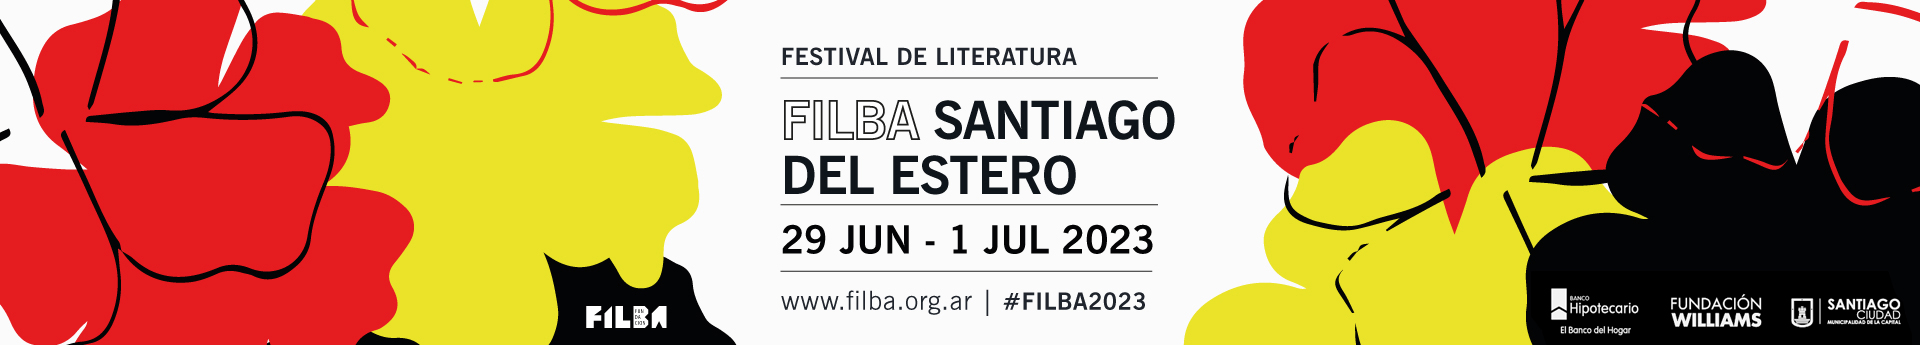 Filba Santiago del Estero 2023